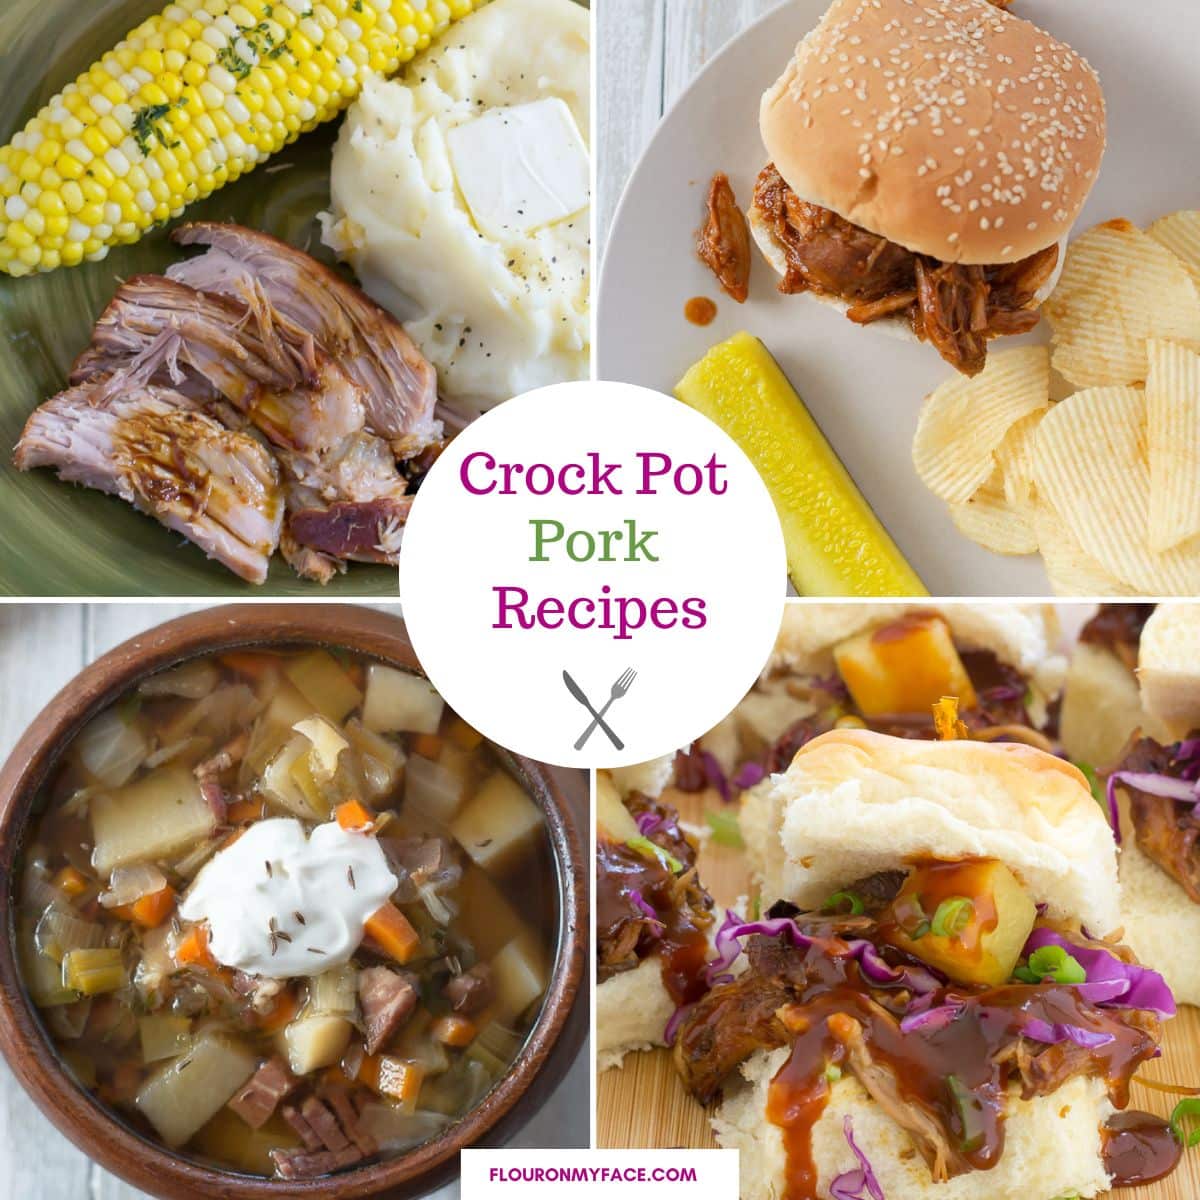 Small collage photo of crock pot pork recipes.